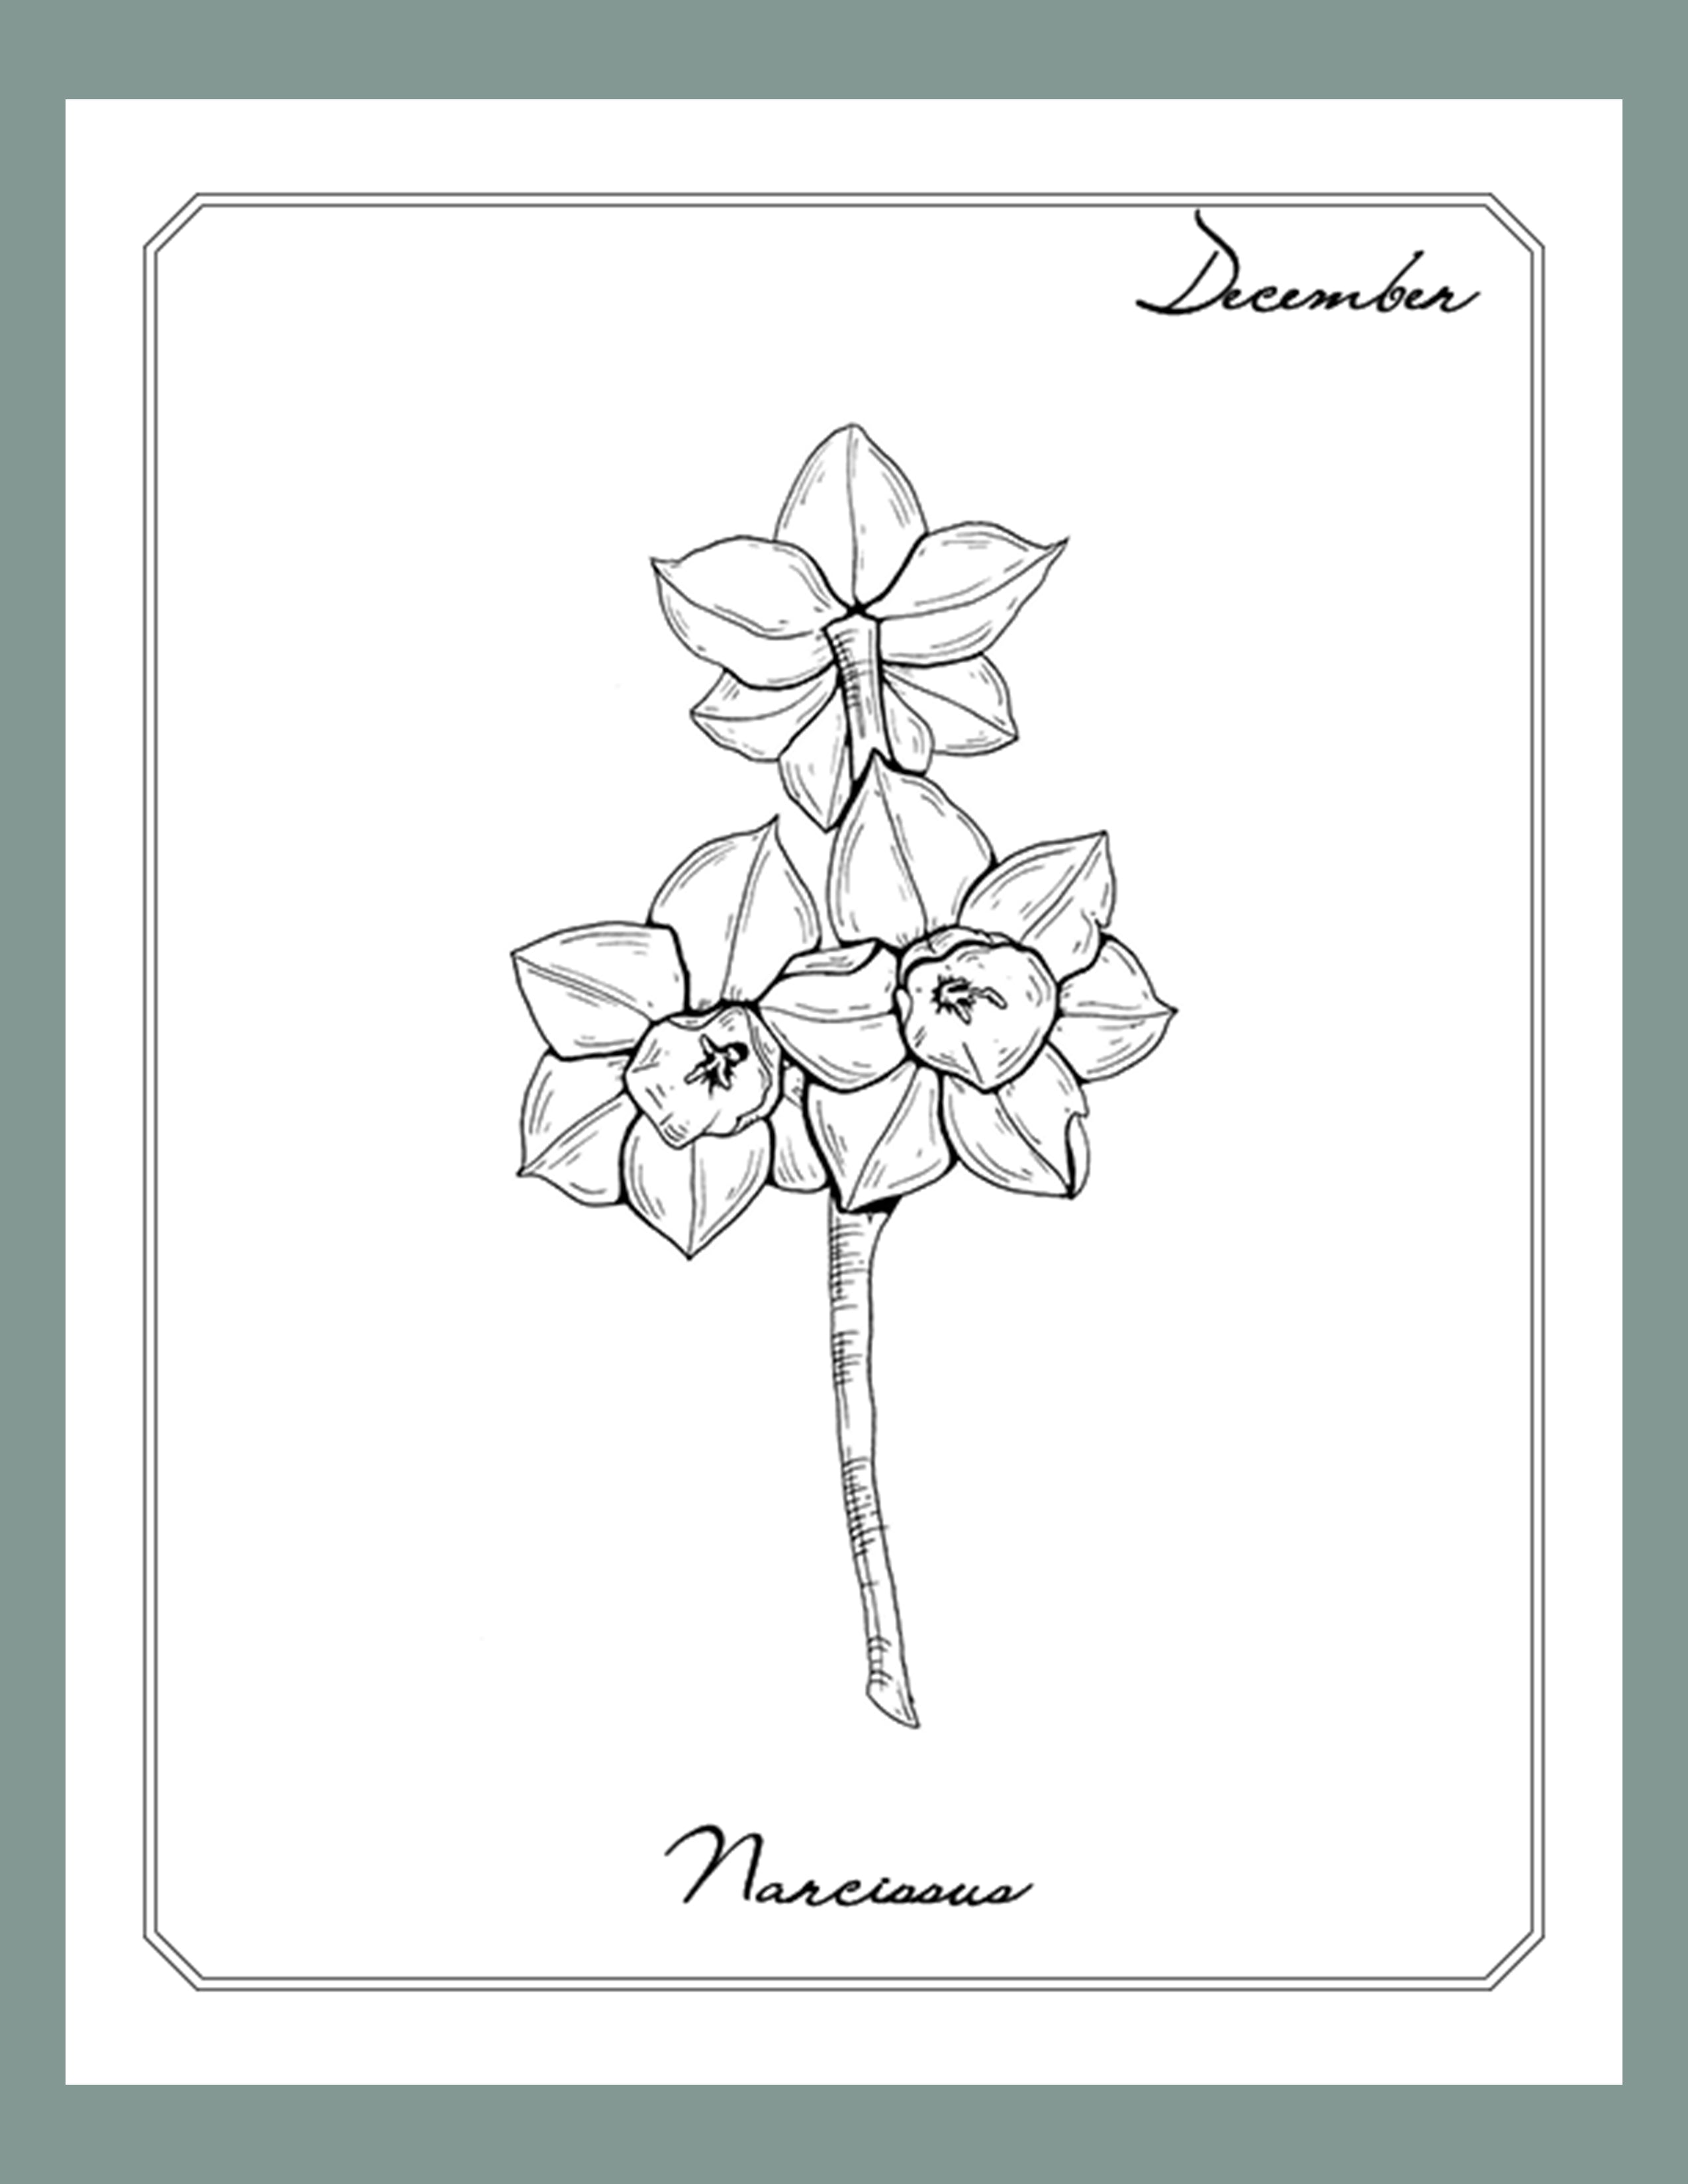 December birth flower  Narcissus For grandma  Narcissus   Narcissus  tattoo Birth flower tattoos Tattoo fonts